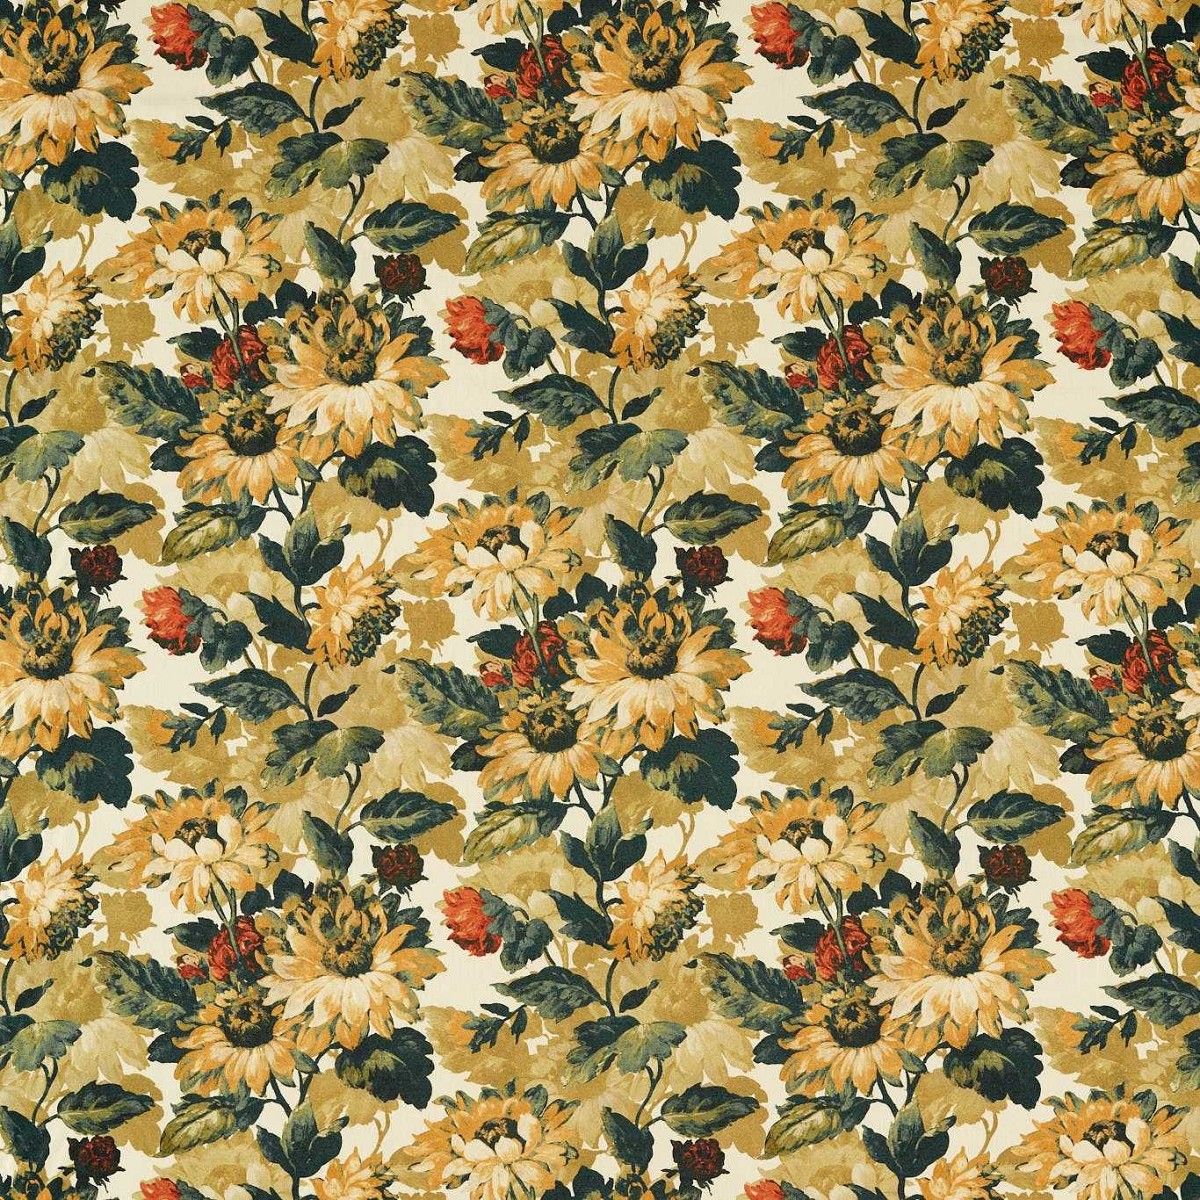 Sunforest Olive/Russet Fabric by Clarke & Clarke